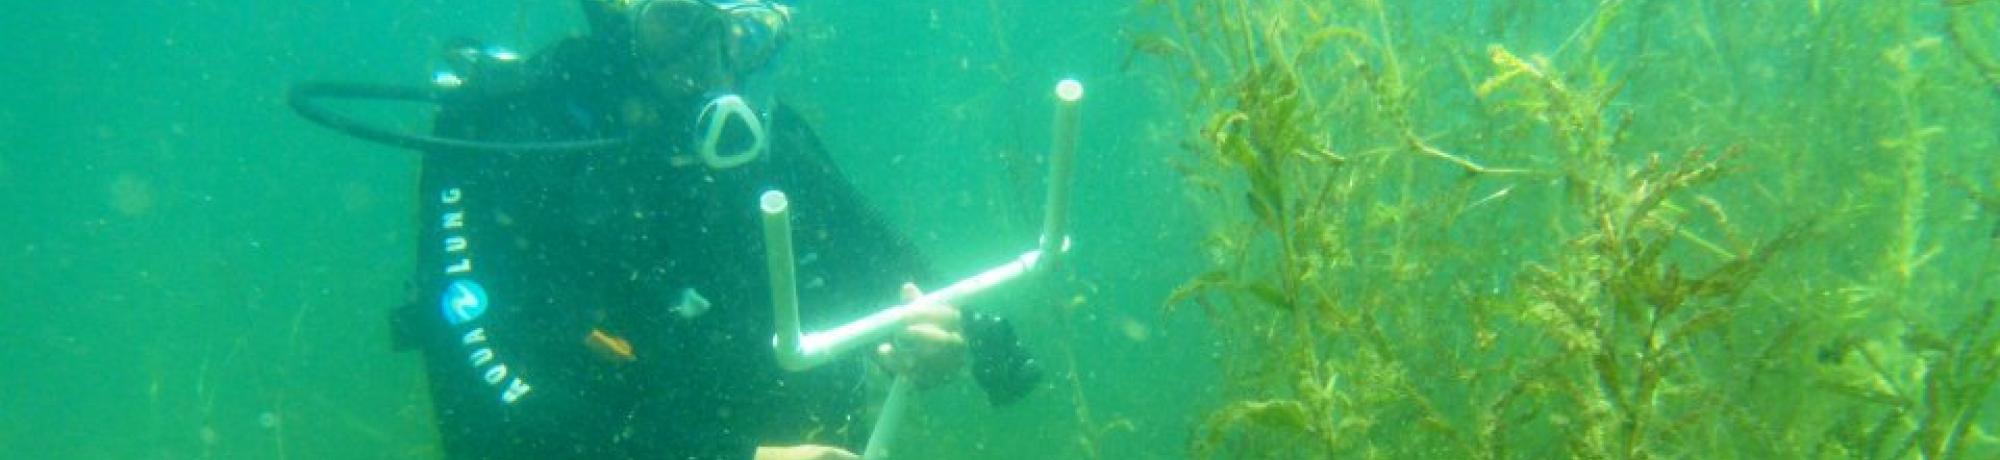 Research diver measuring curlyleaf pondweed